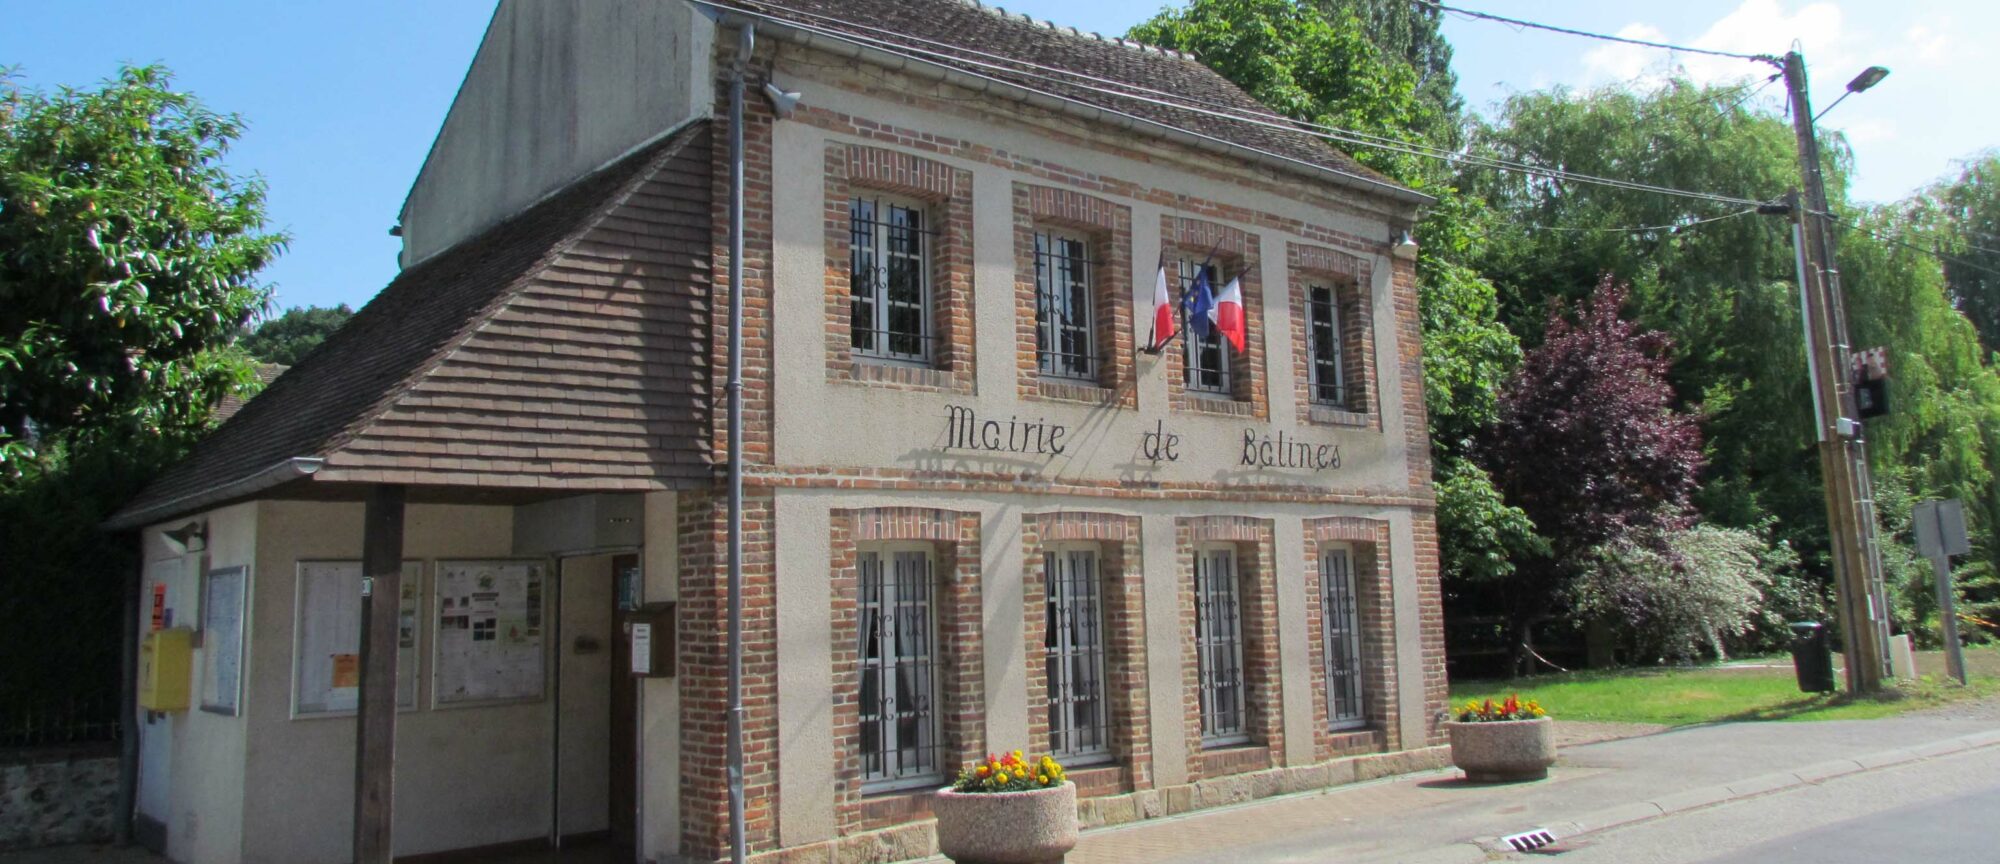 Mairie Balines-Bandeau